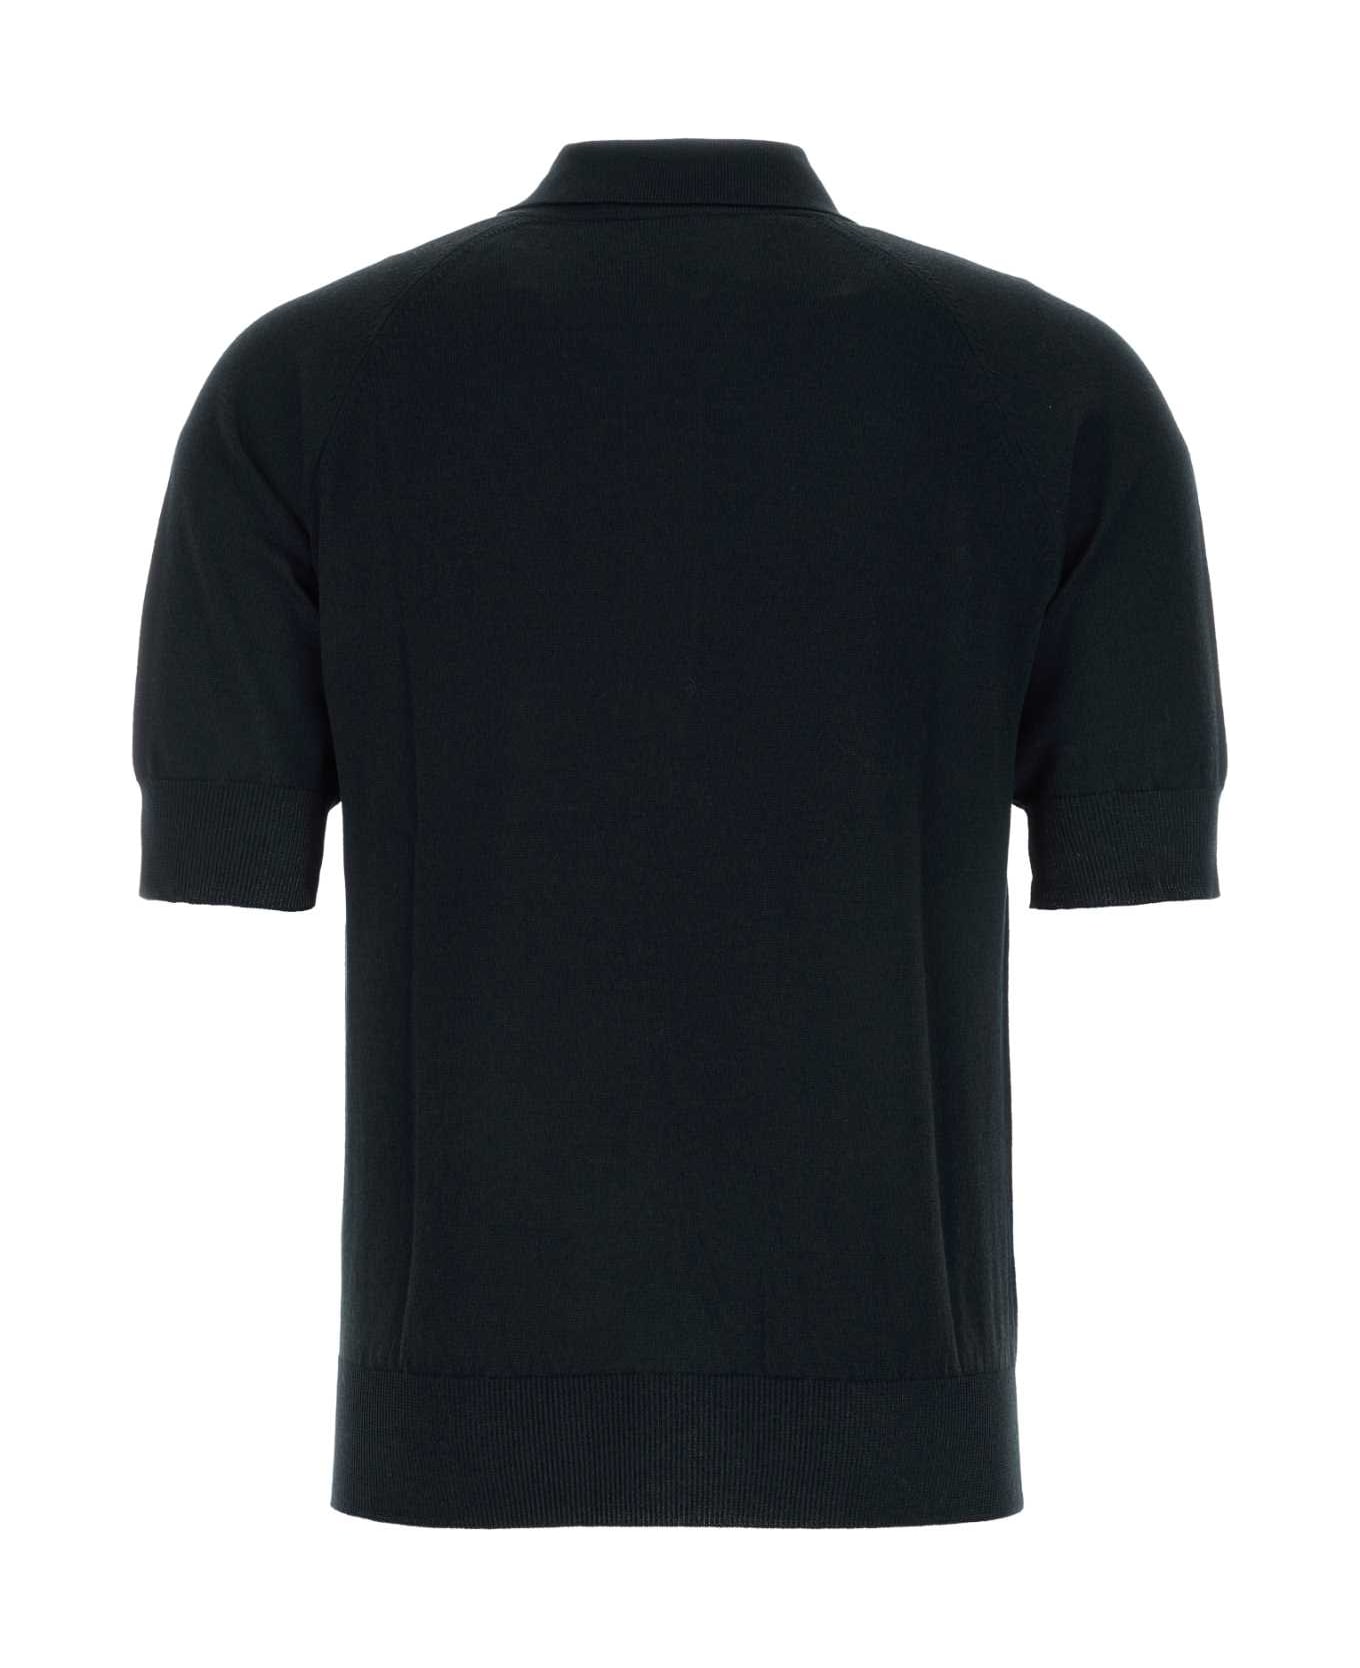 PT Torino Black Cotton Blend Polo Shirt - 0990